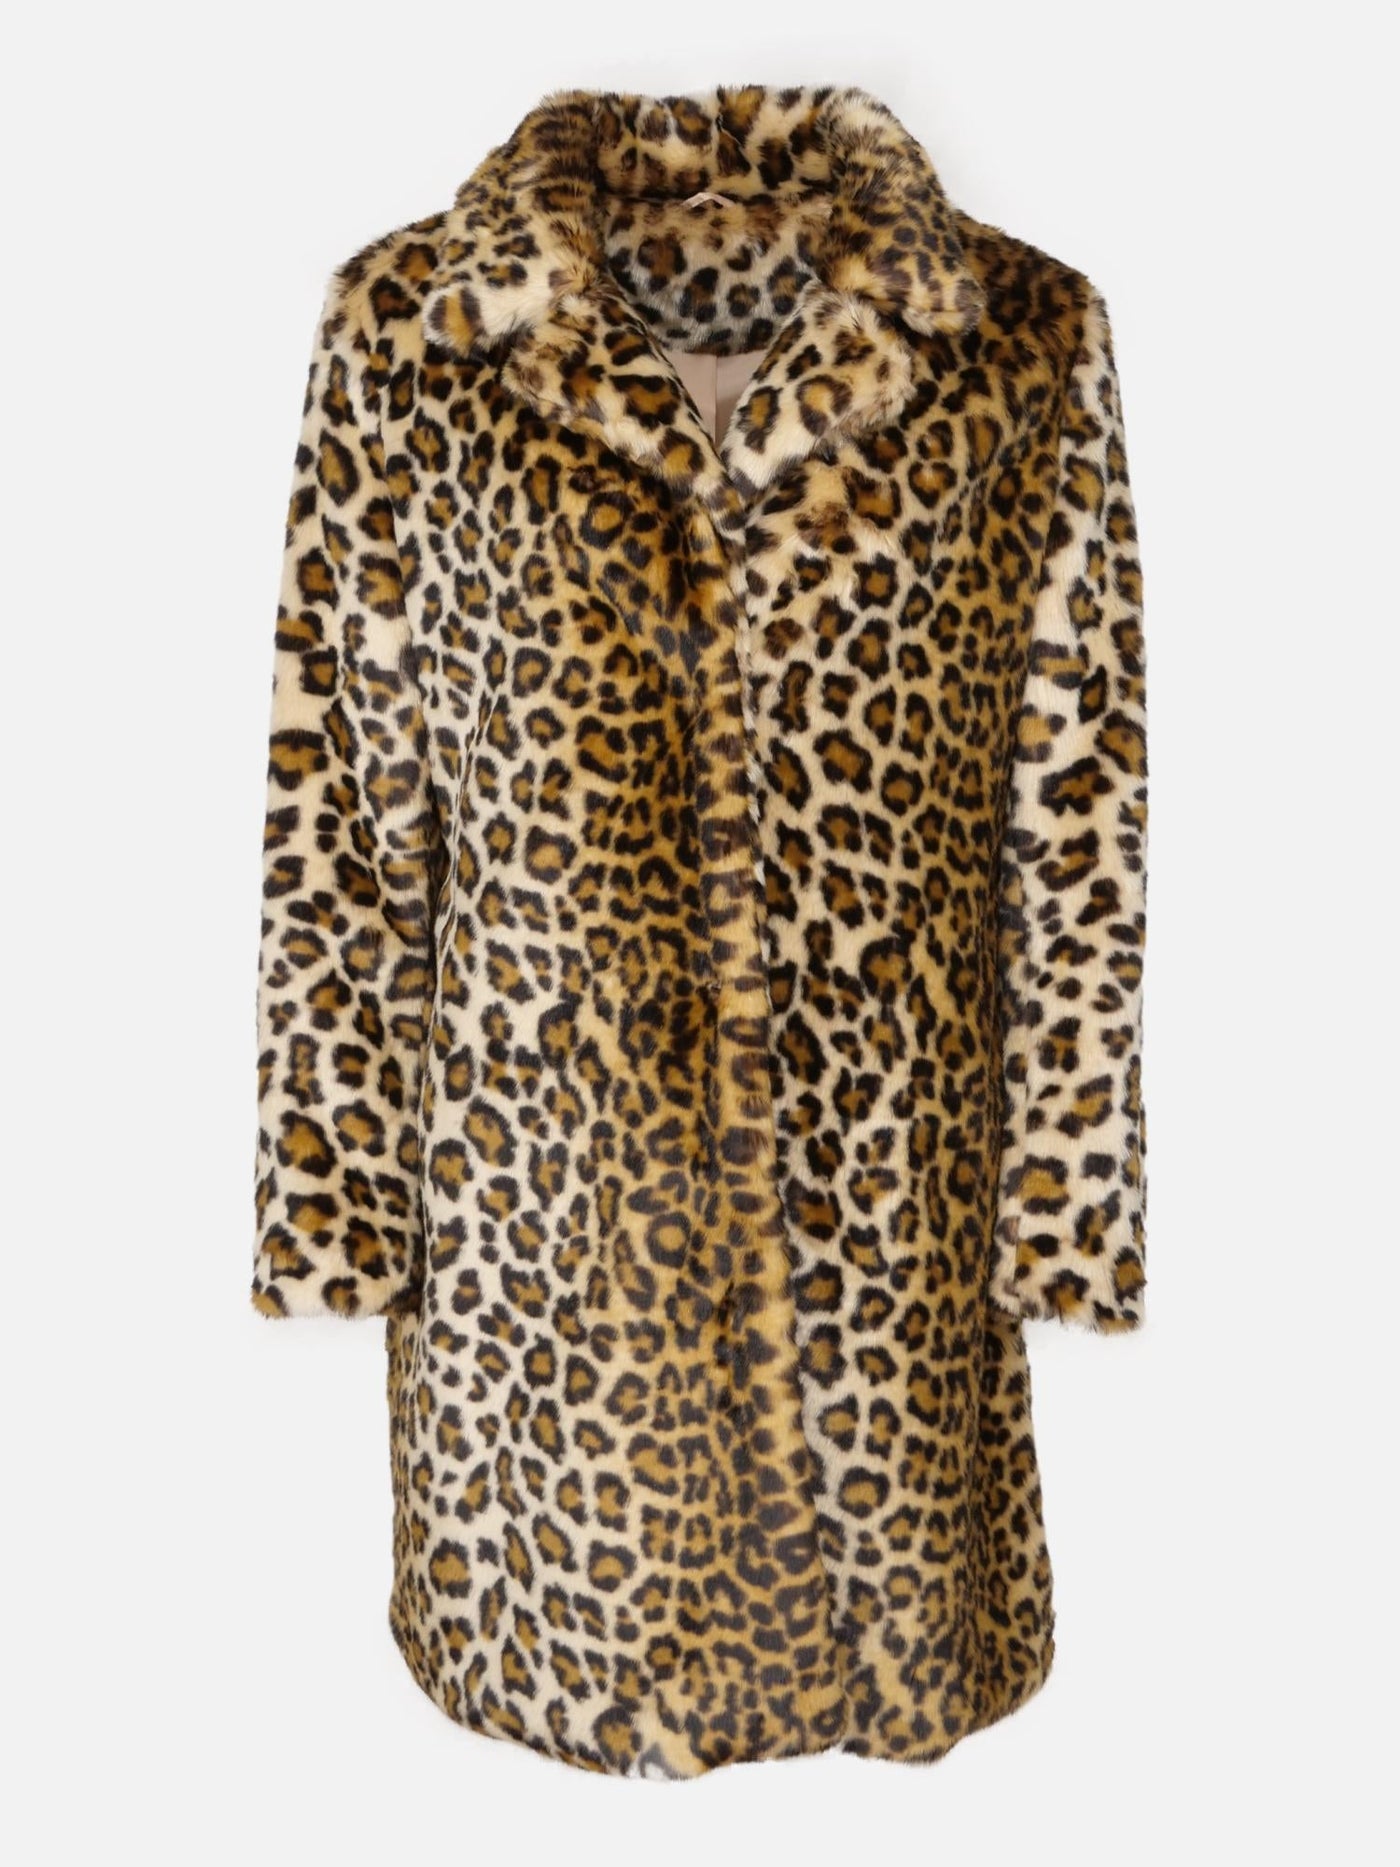 0J107 - 100% Faux Fur - Women - Leopard Print